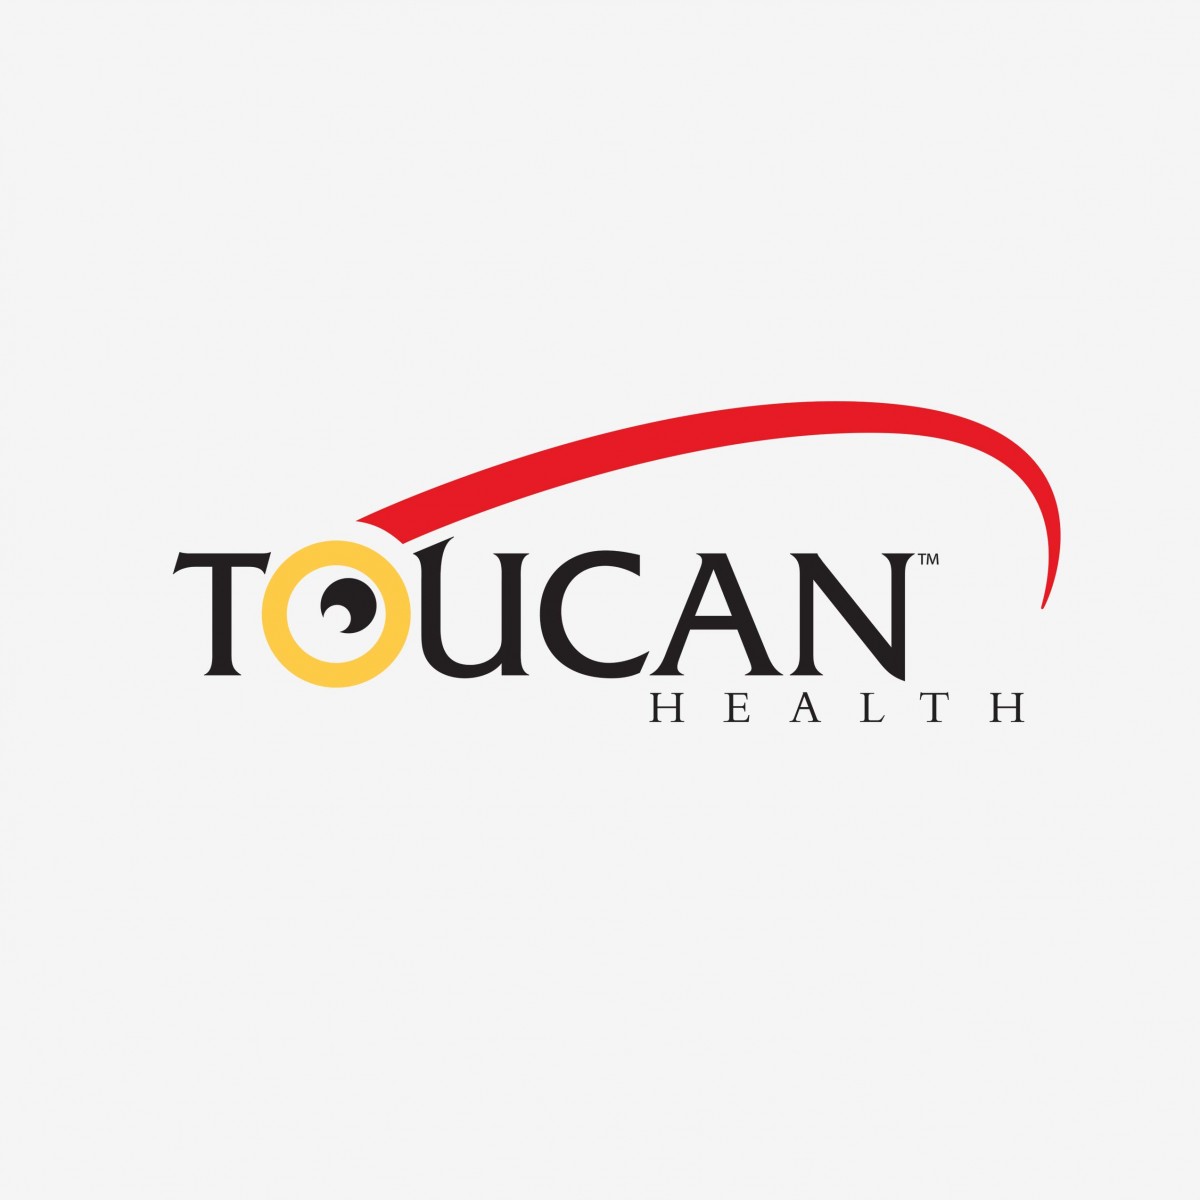 Toucan Health corporate identity